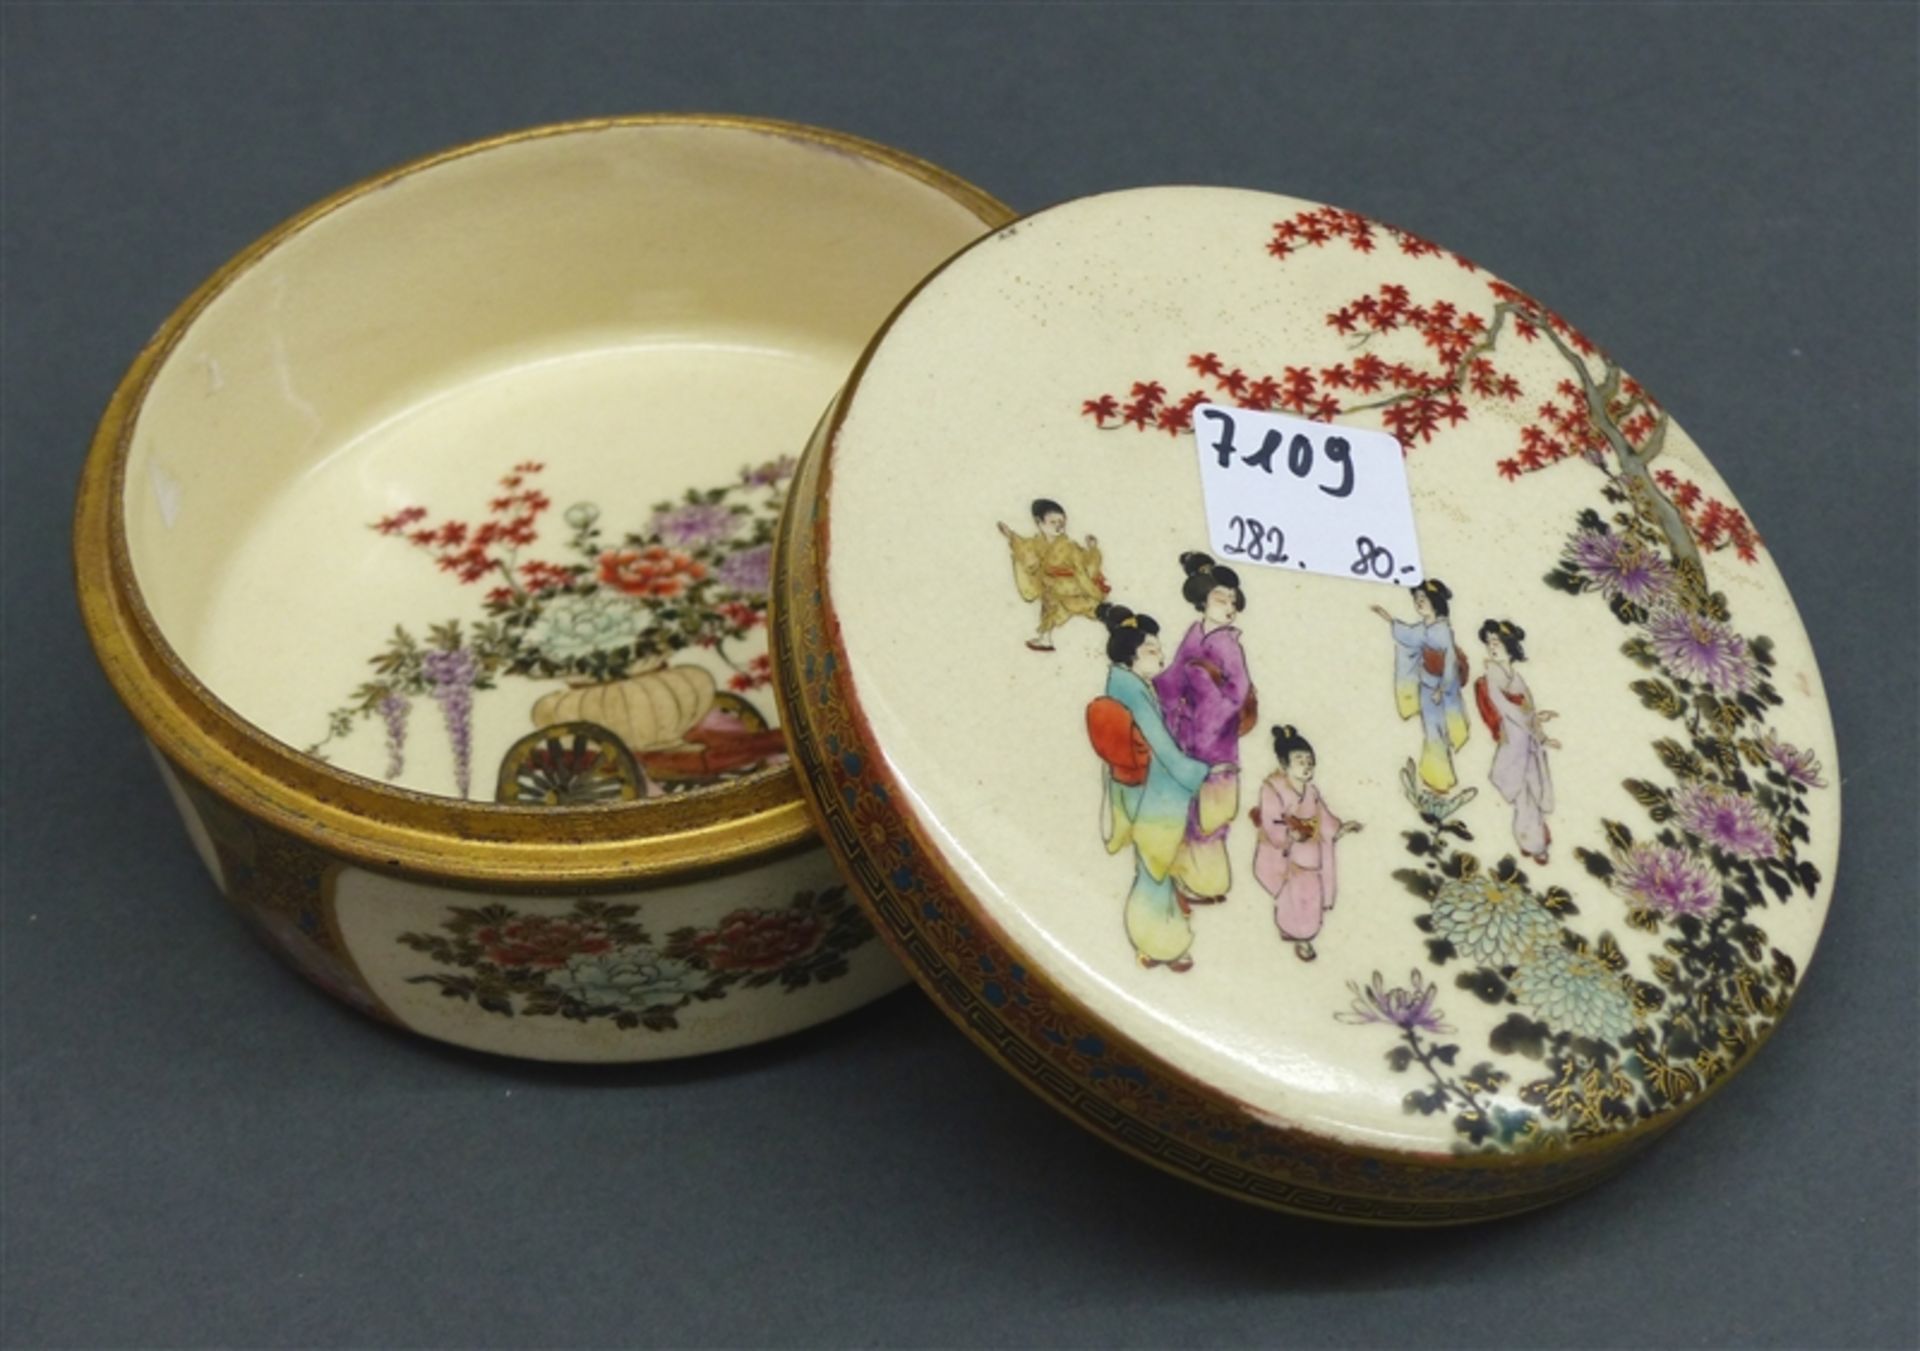 Keramikdeckeldose rund, Japan, Ende 19. Jh., florale Bemalung, Geishaszenen, h 5,5 cm, d 11 cm,